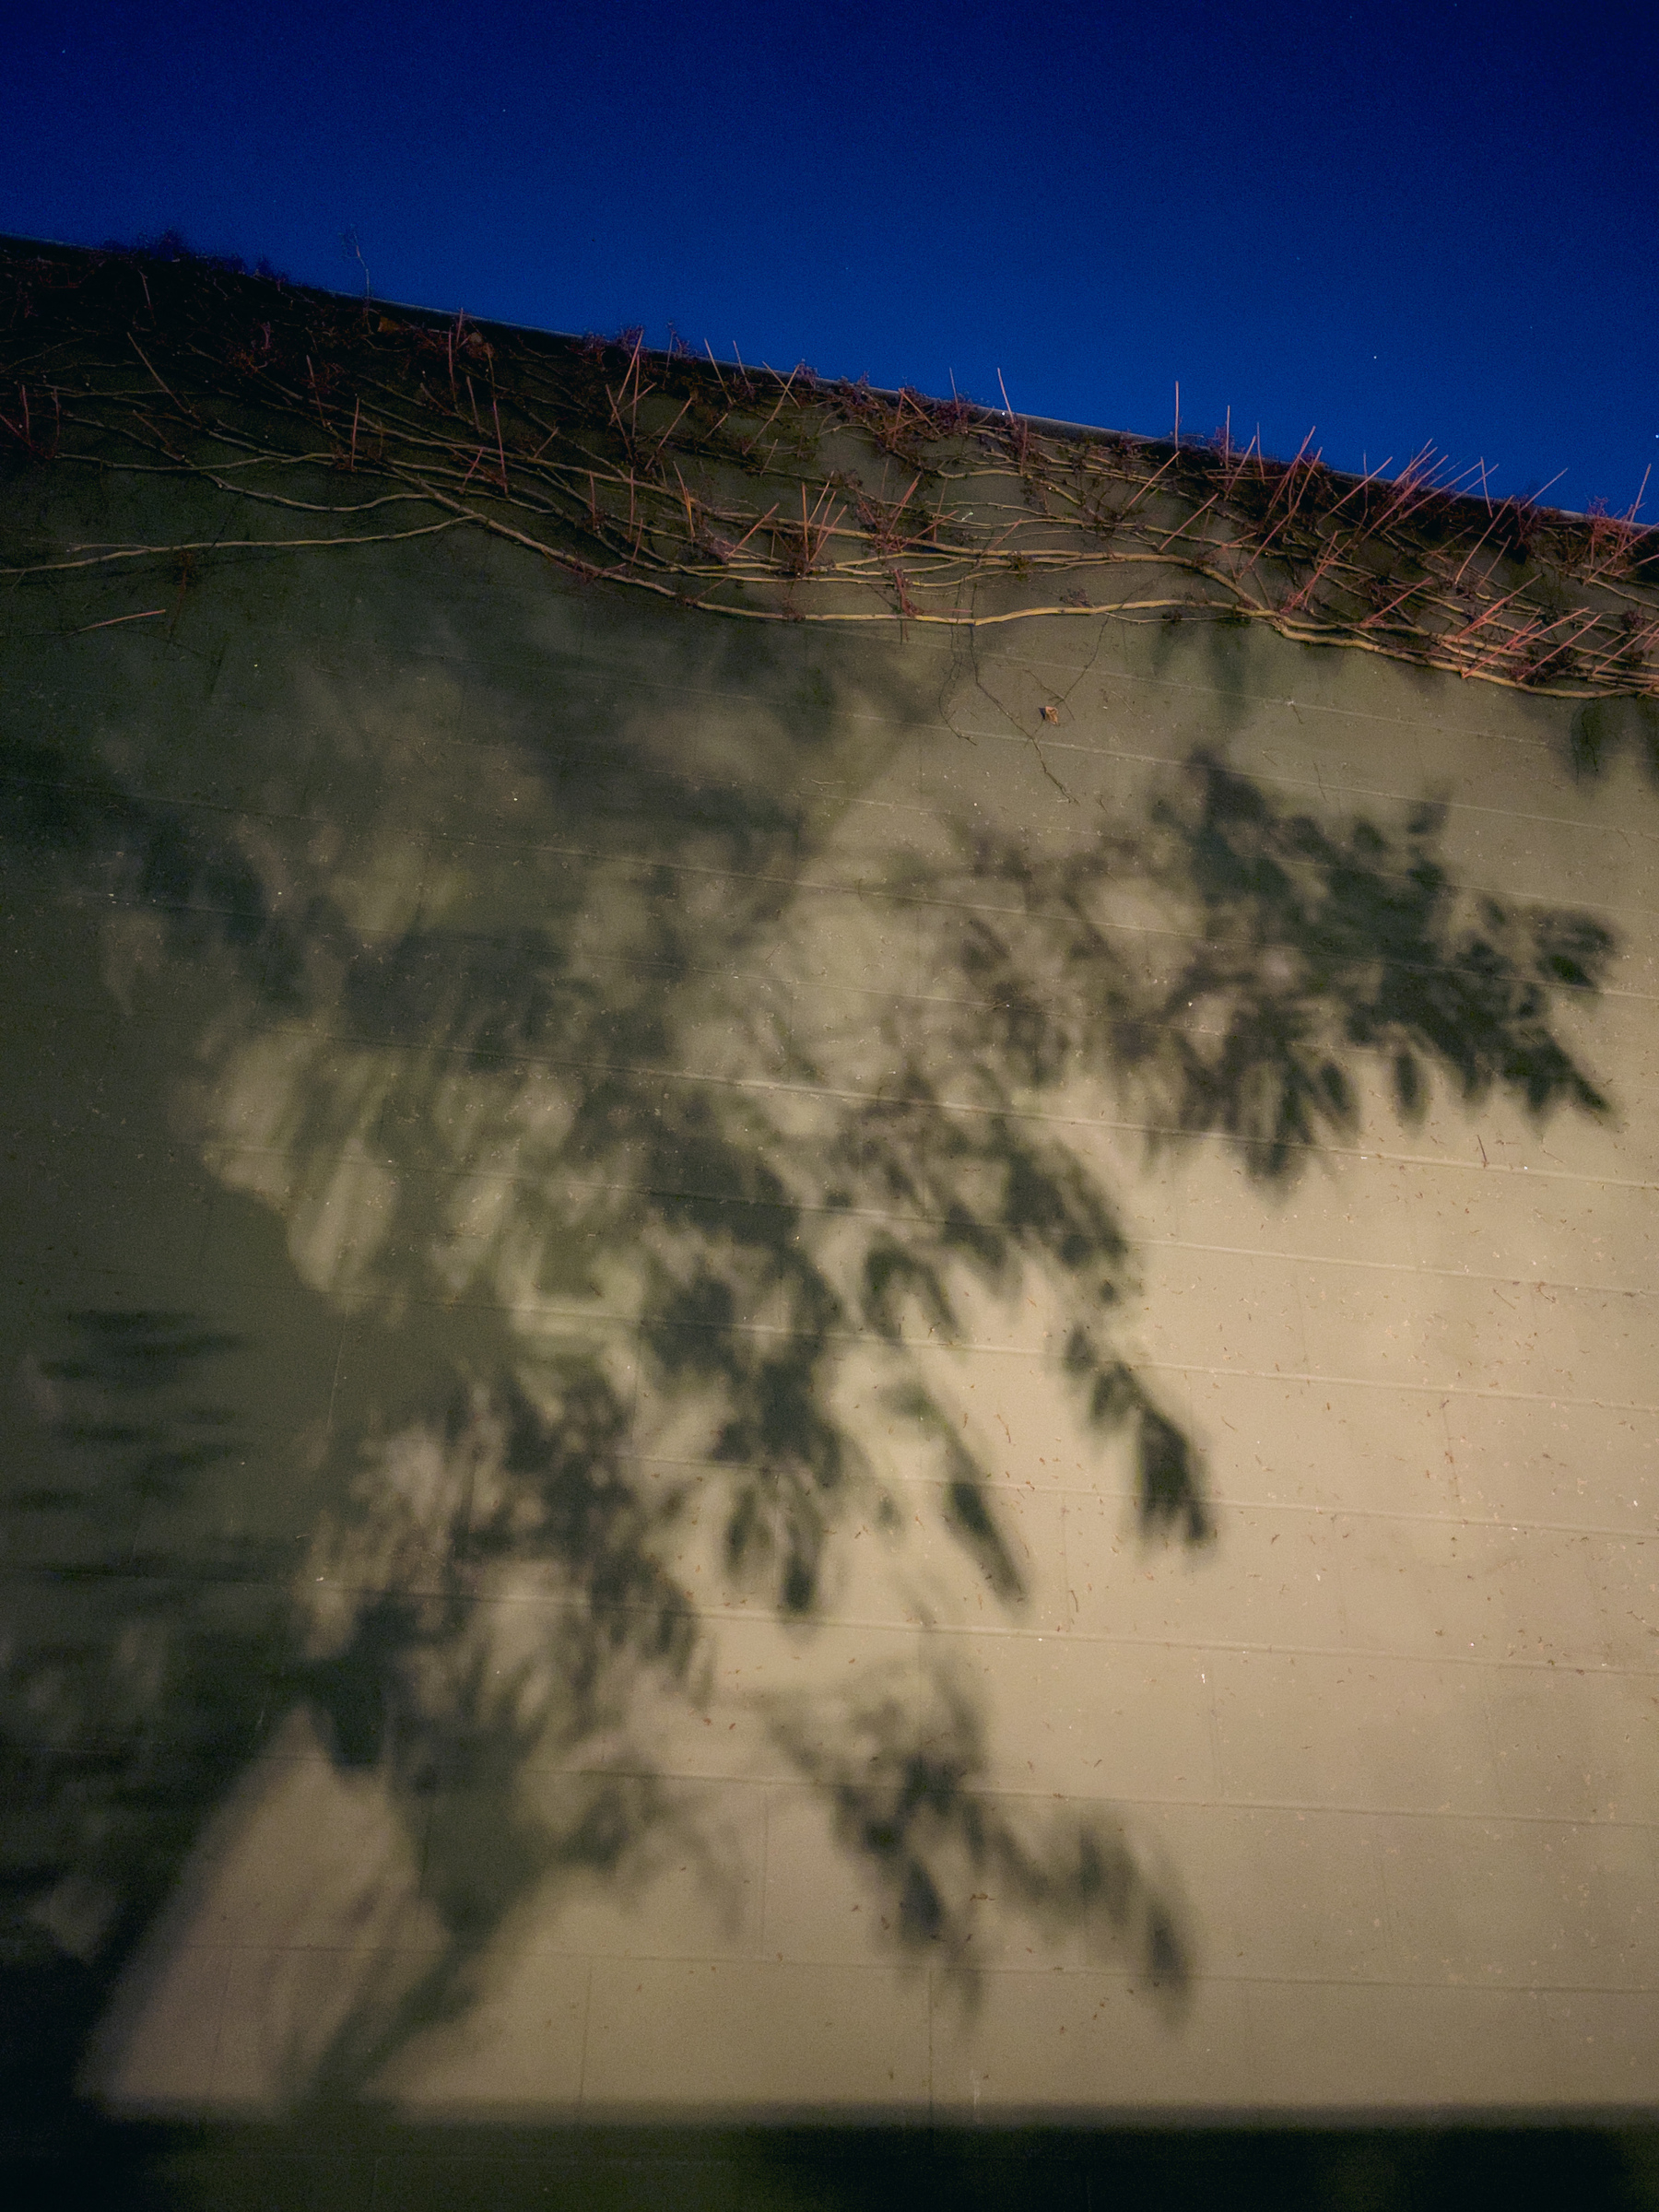 Branch and leaf shadows on a CMU wall.